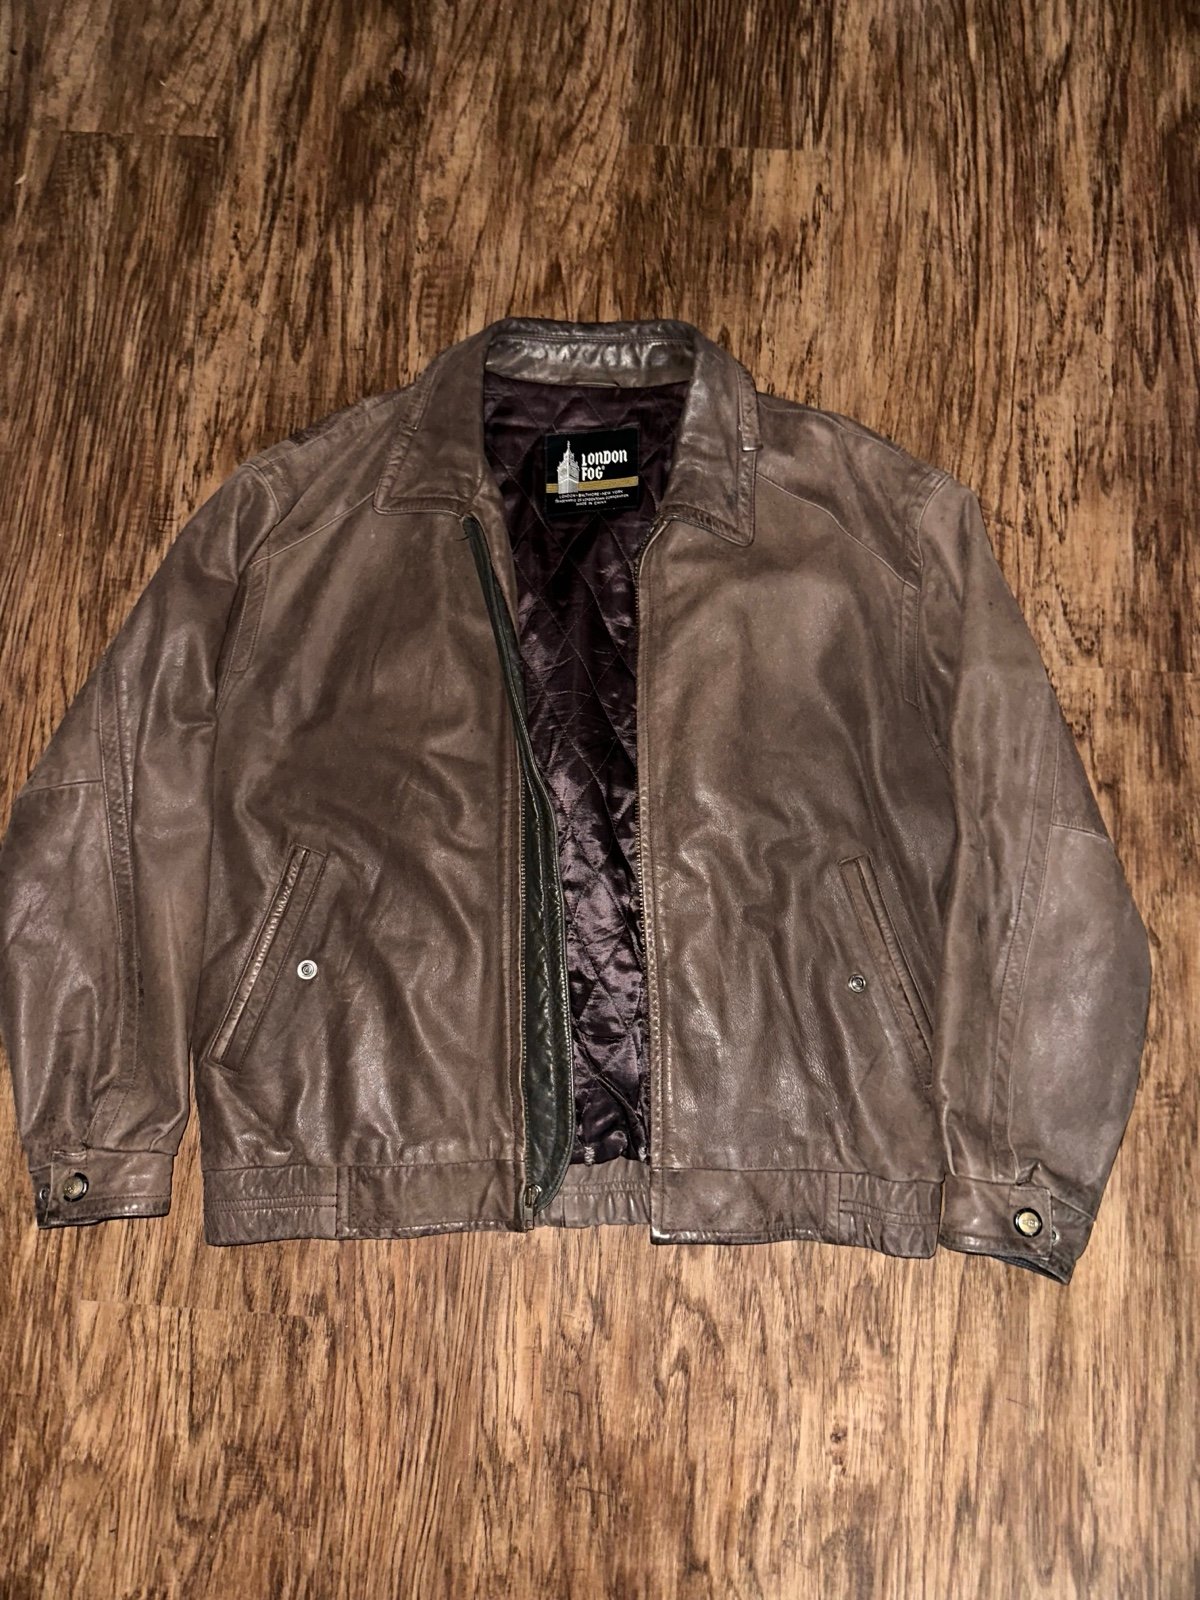 Vintage 70s London fog leather jacket size large FvQHztkWm